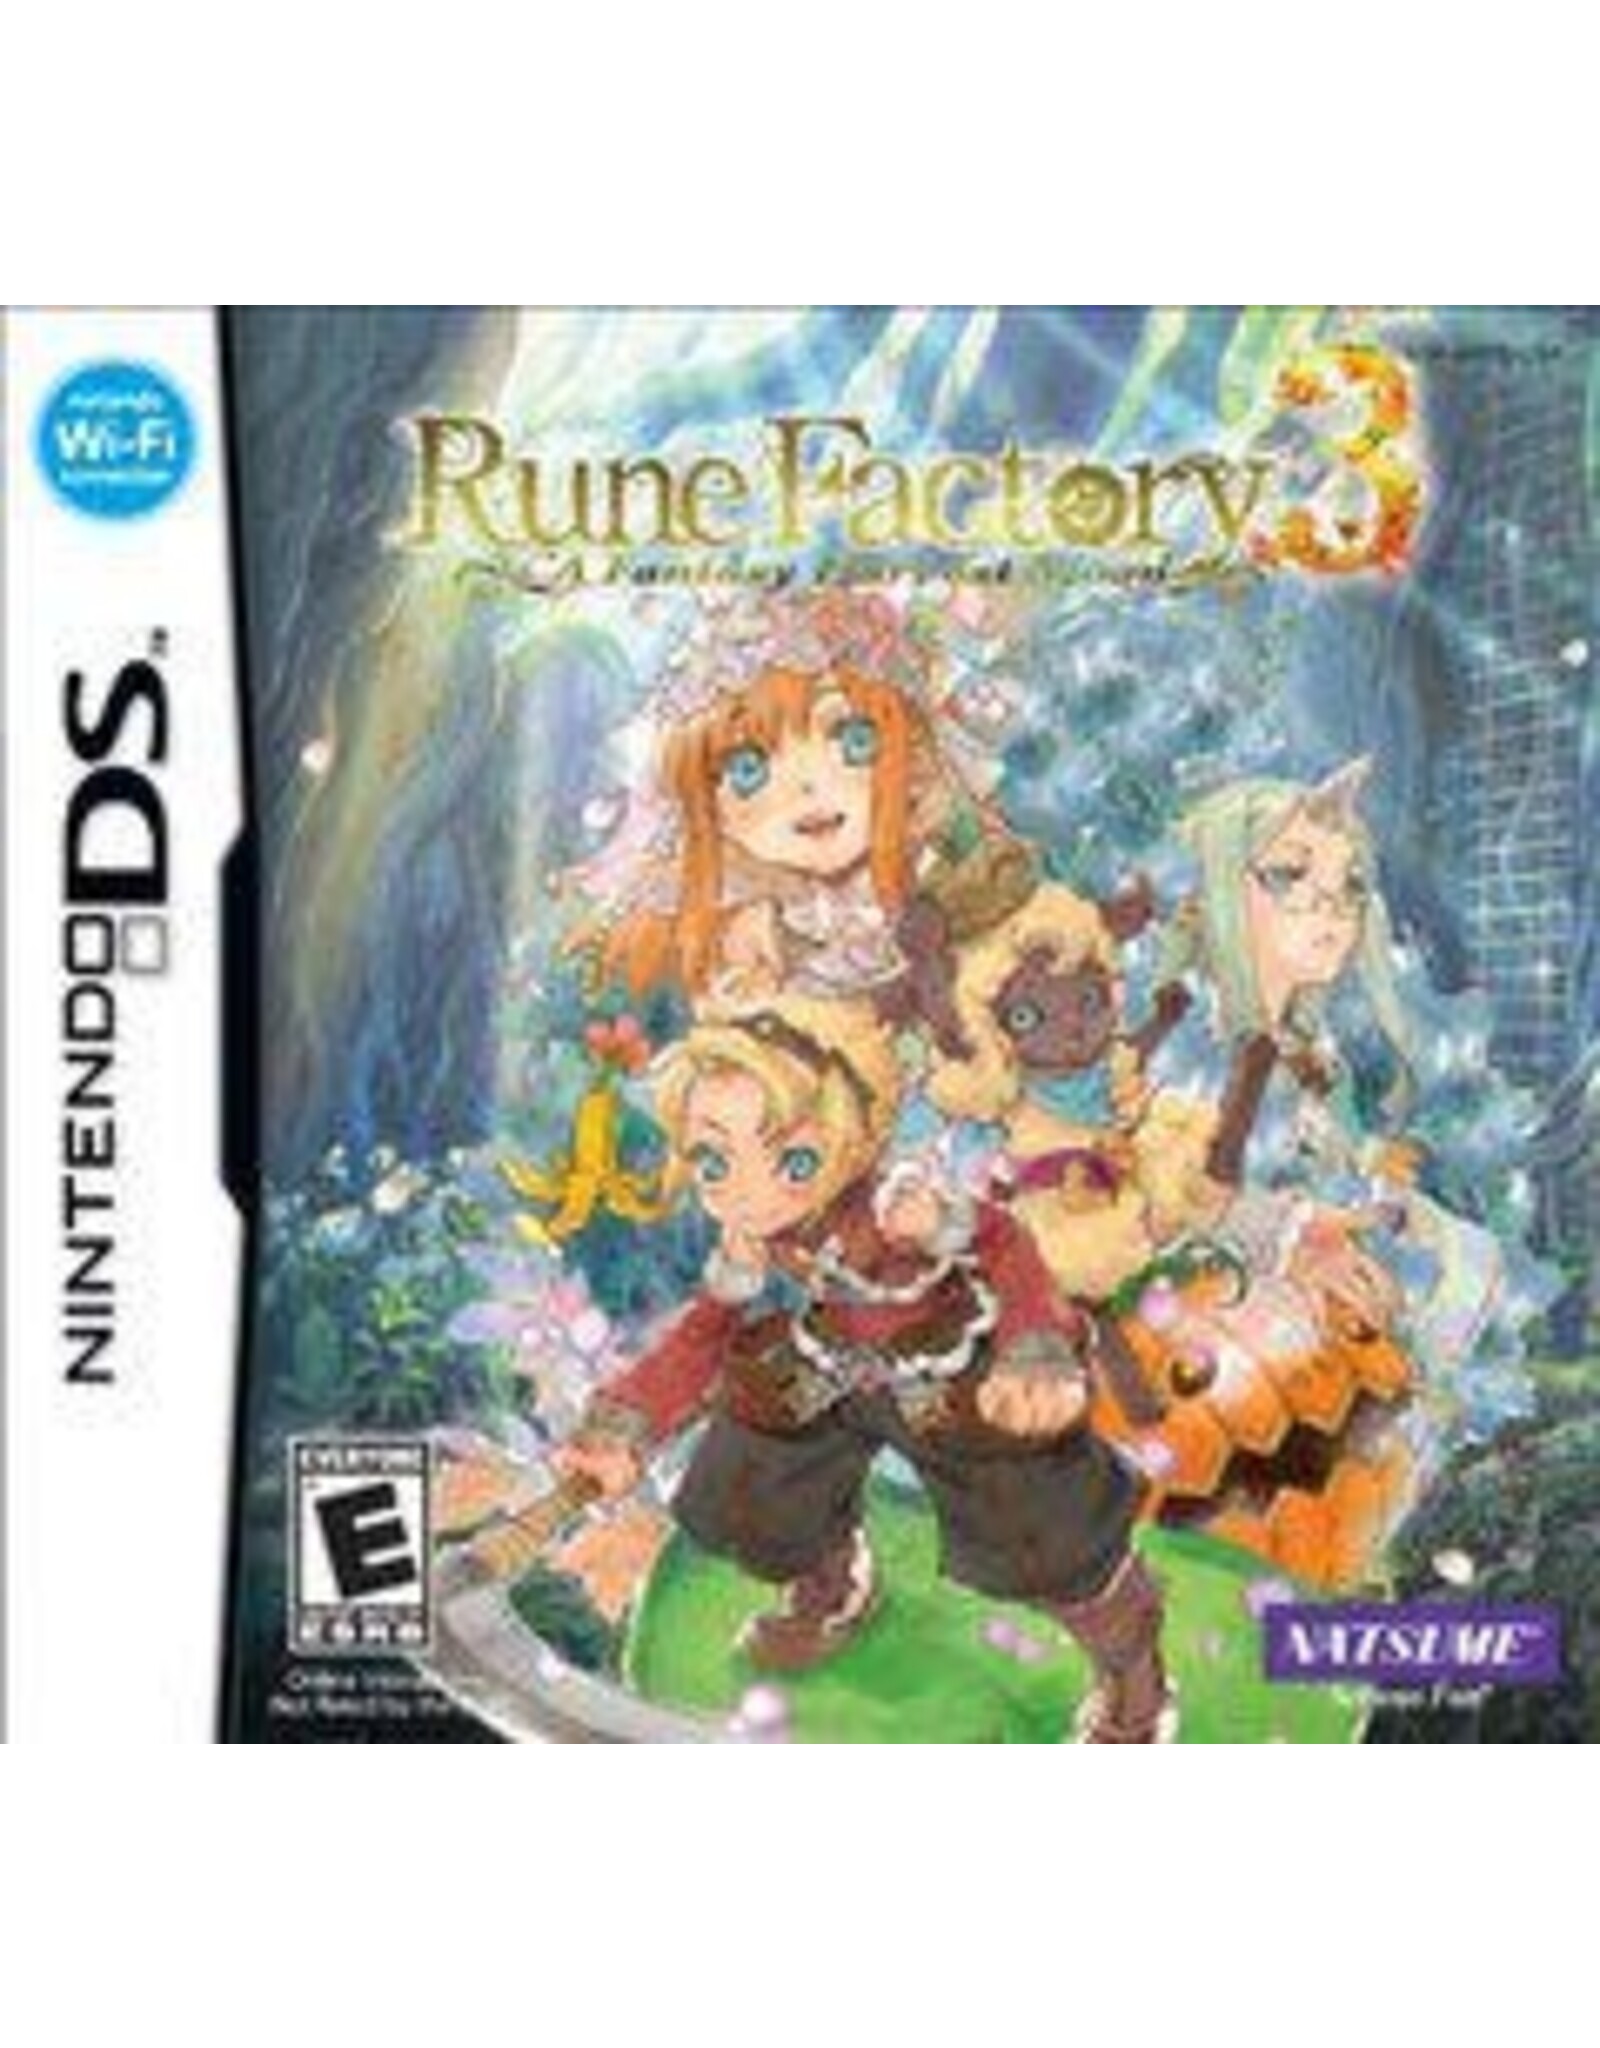 Nintendo DS Rune Factory 3: A Fantasy Harvest Moon (Brand New)